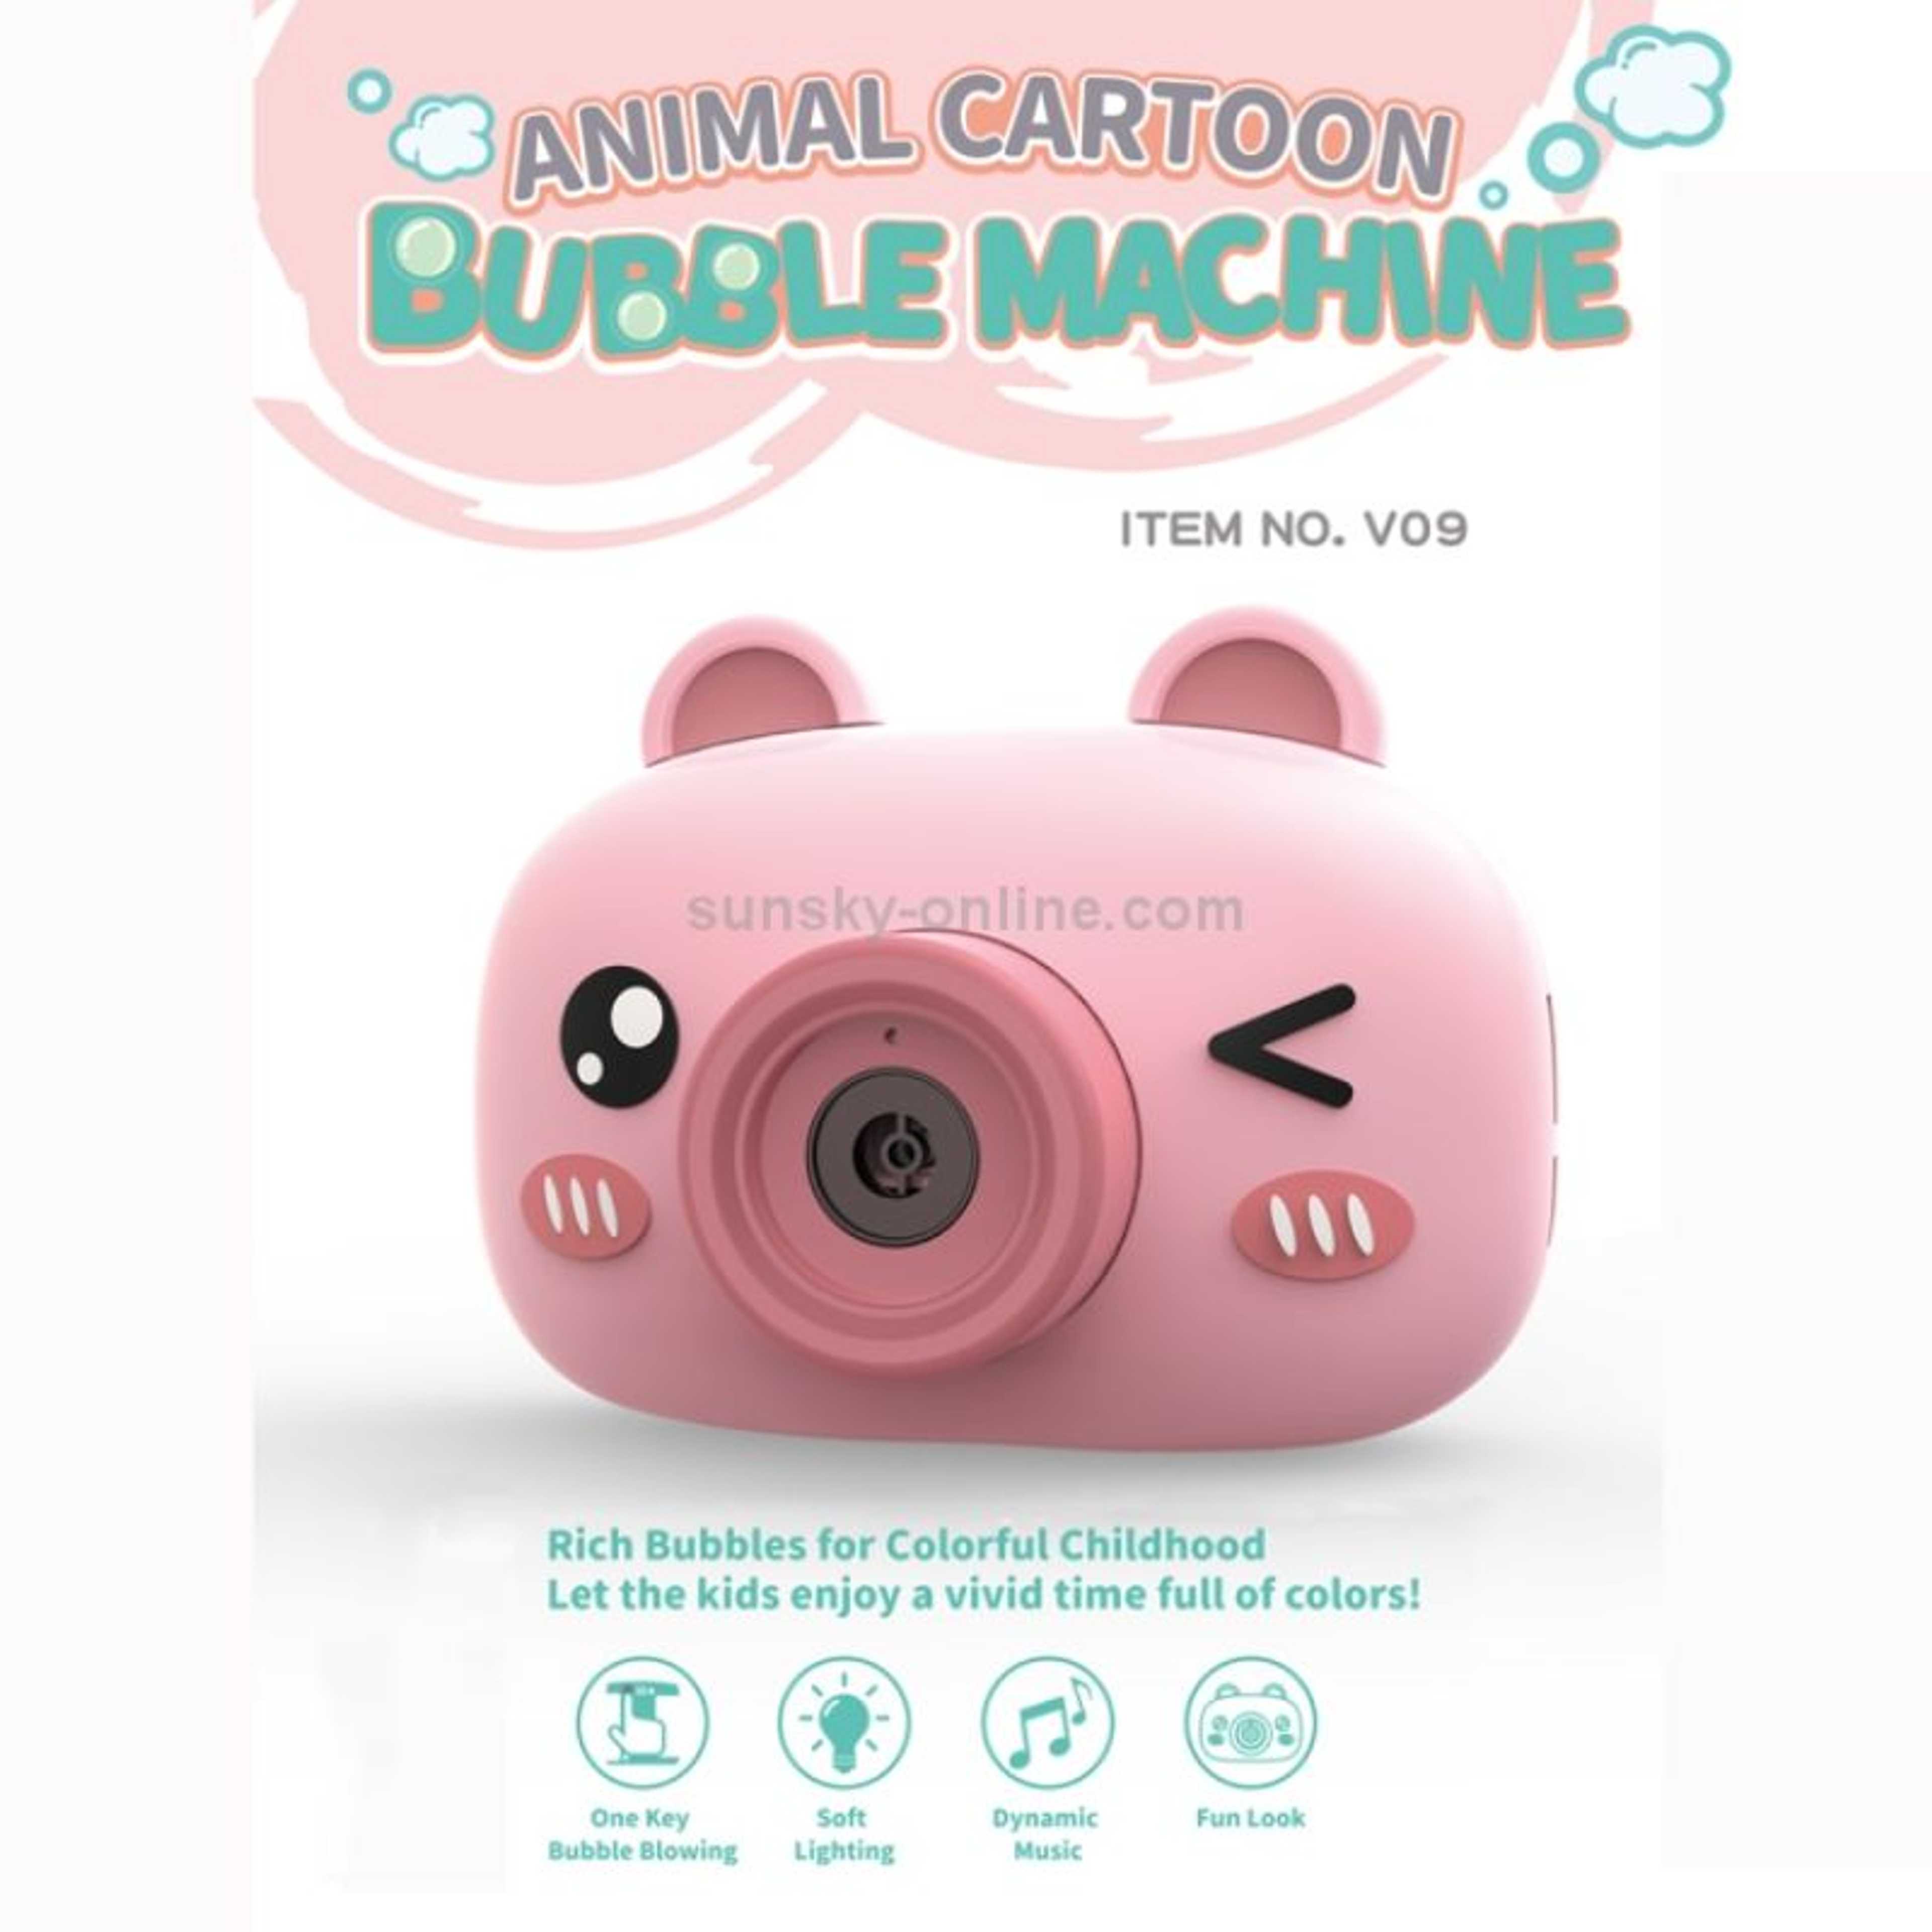 JJRC V09 Cartoon Animal Shape Bubble Maker Machine Toy ( pink )